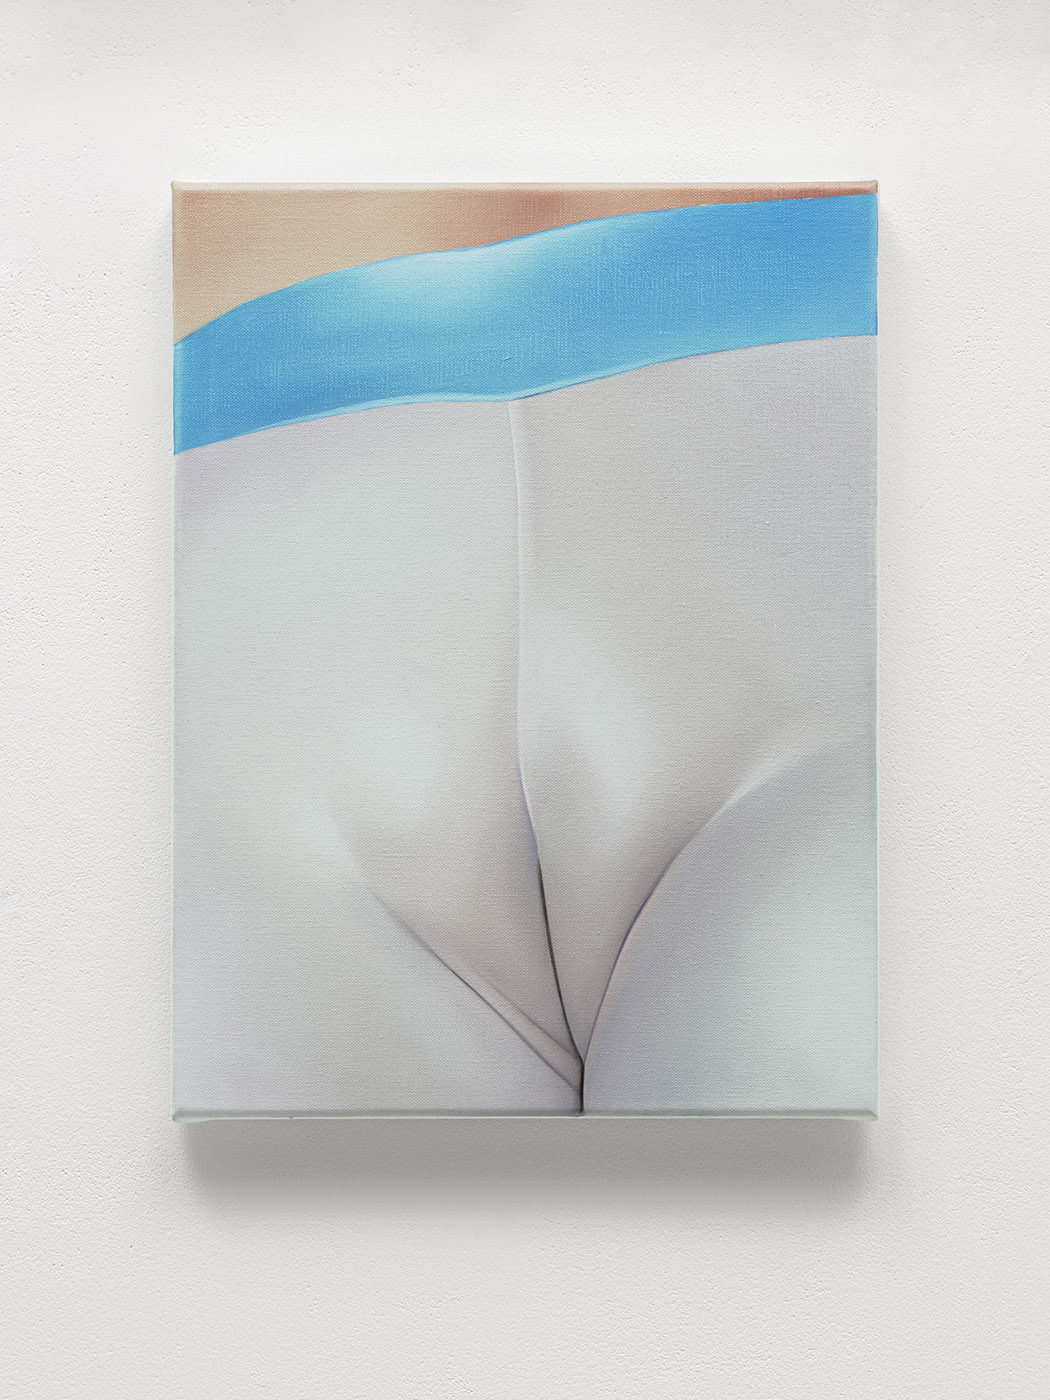 Vivian Greven, X III, 2021, oil on canvas, 40 x 30 cm, 15 3/4 x 11 3/4 in.